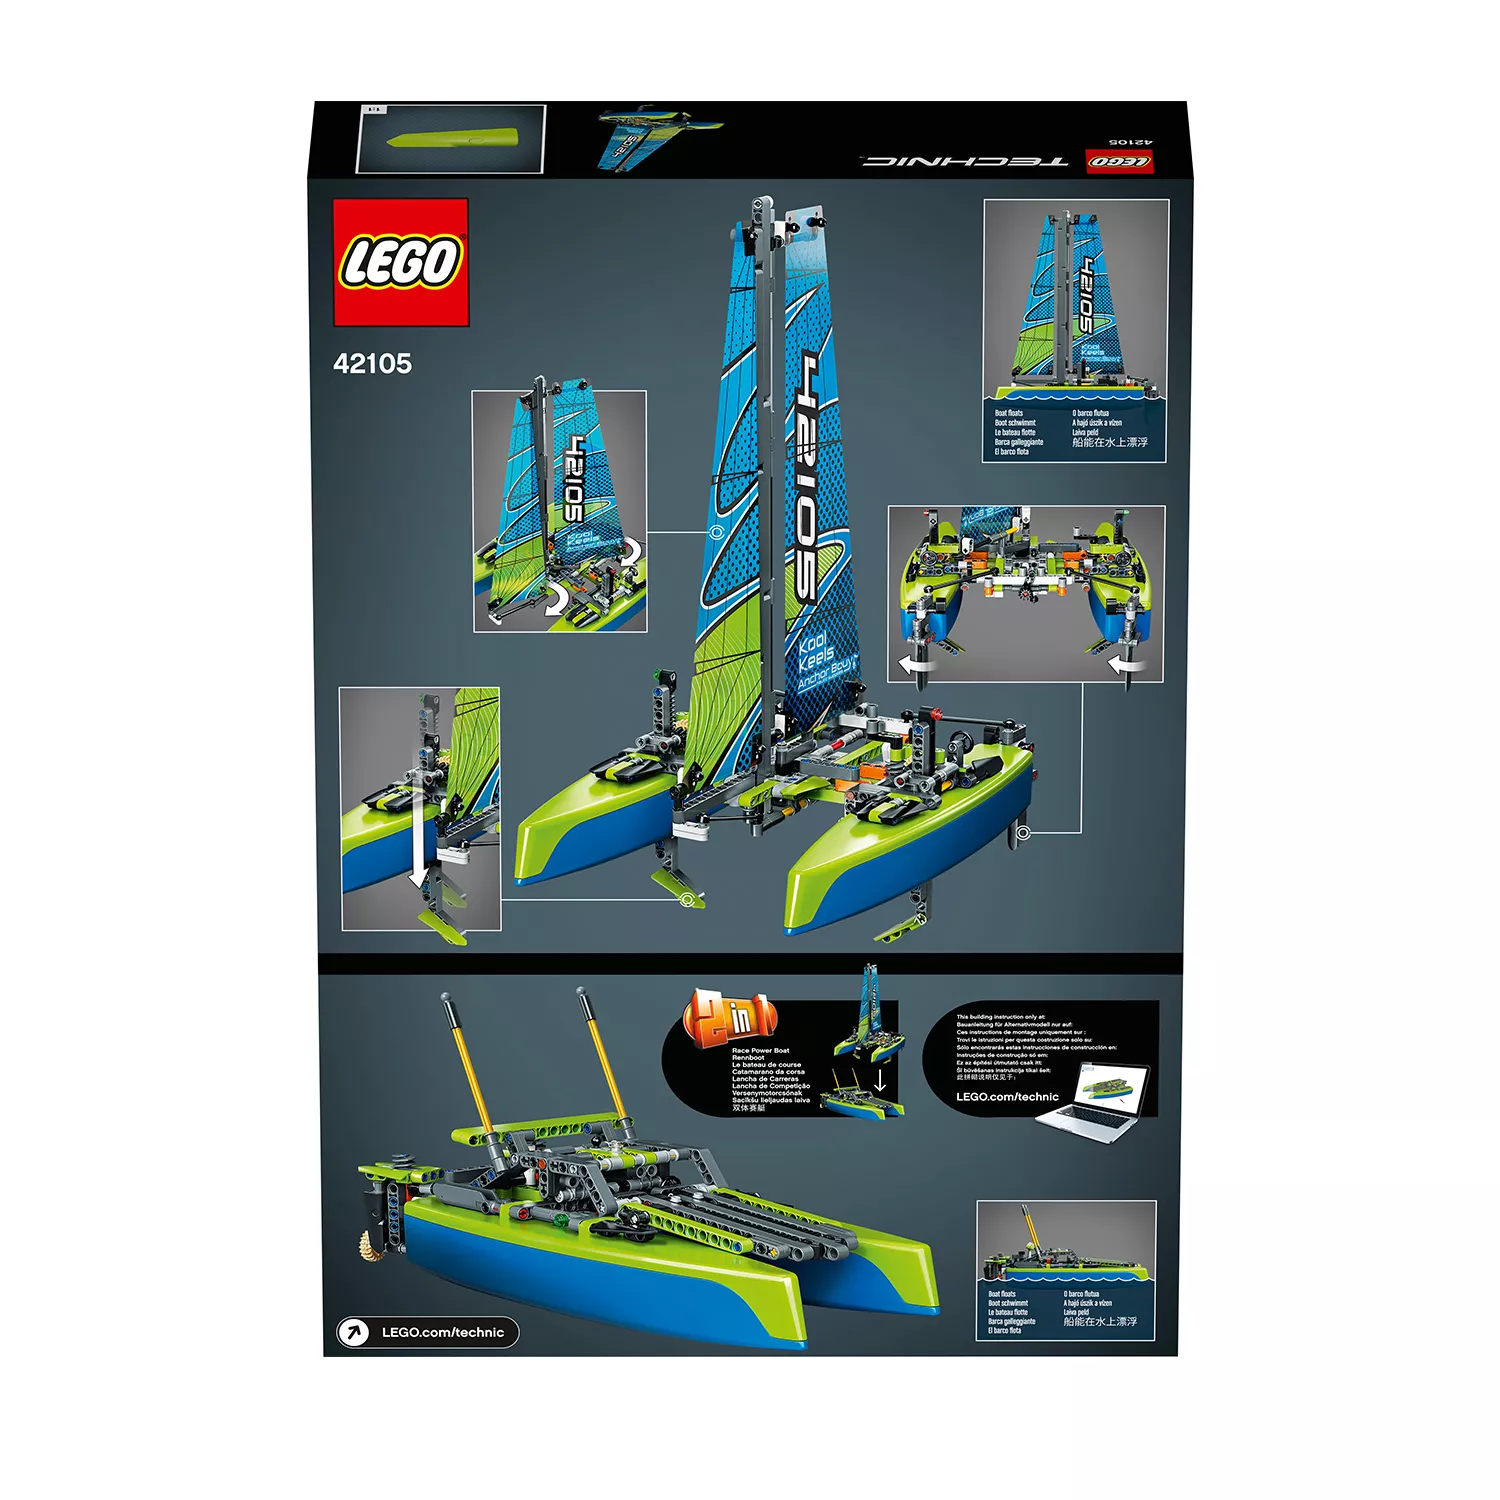 LEGO Technic Katamaran